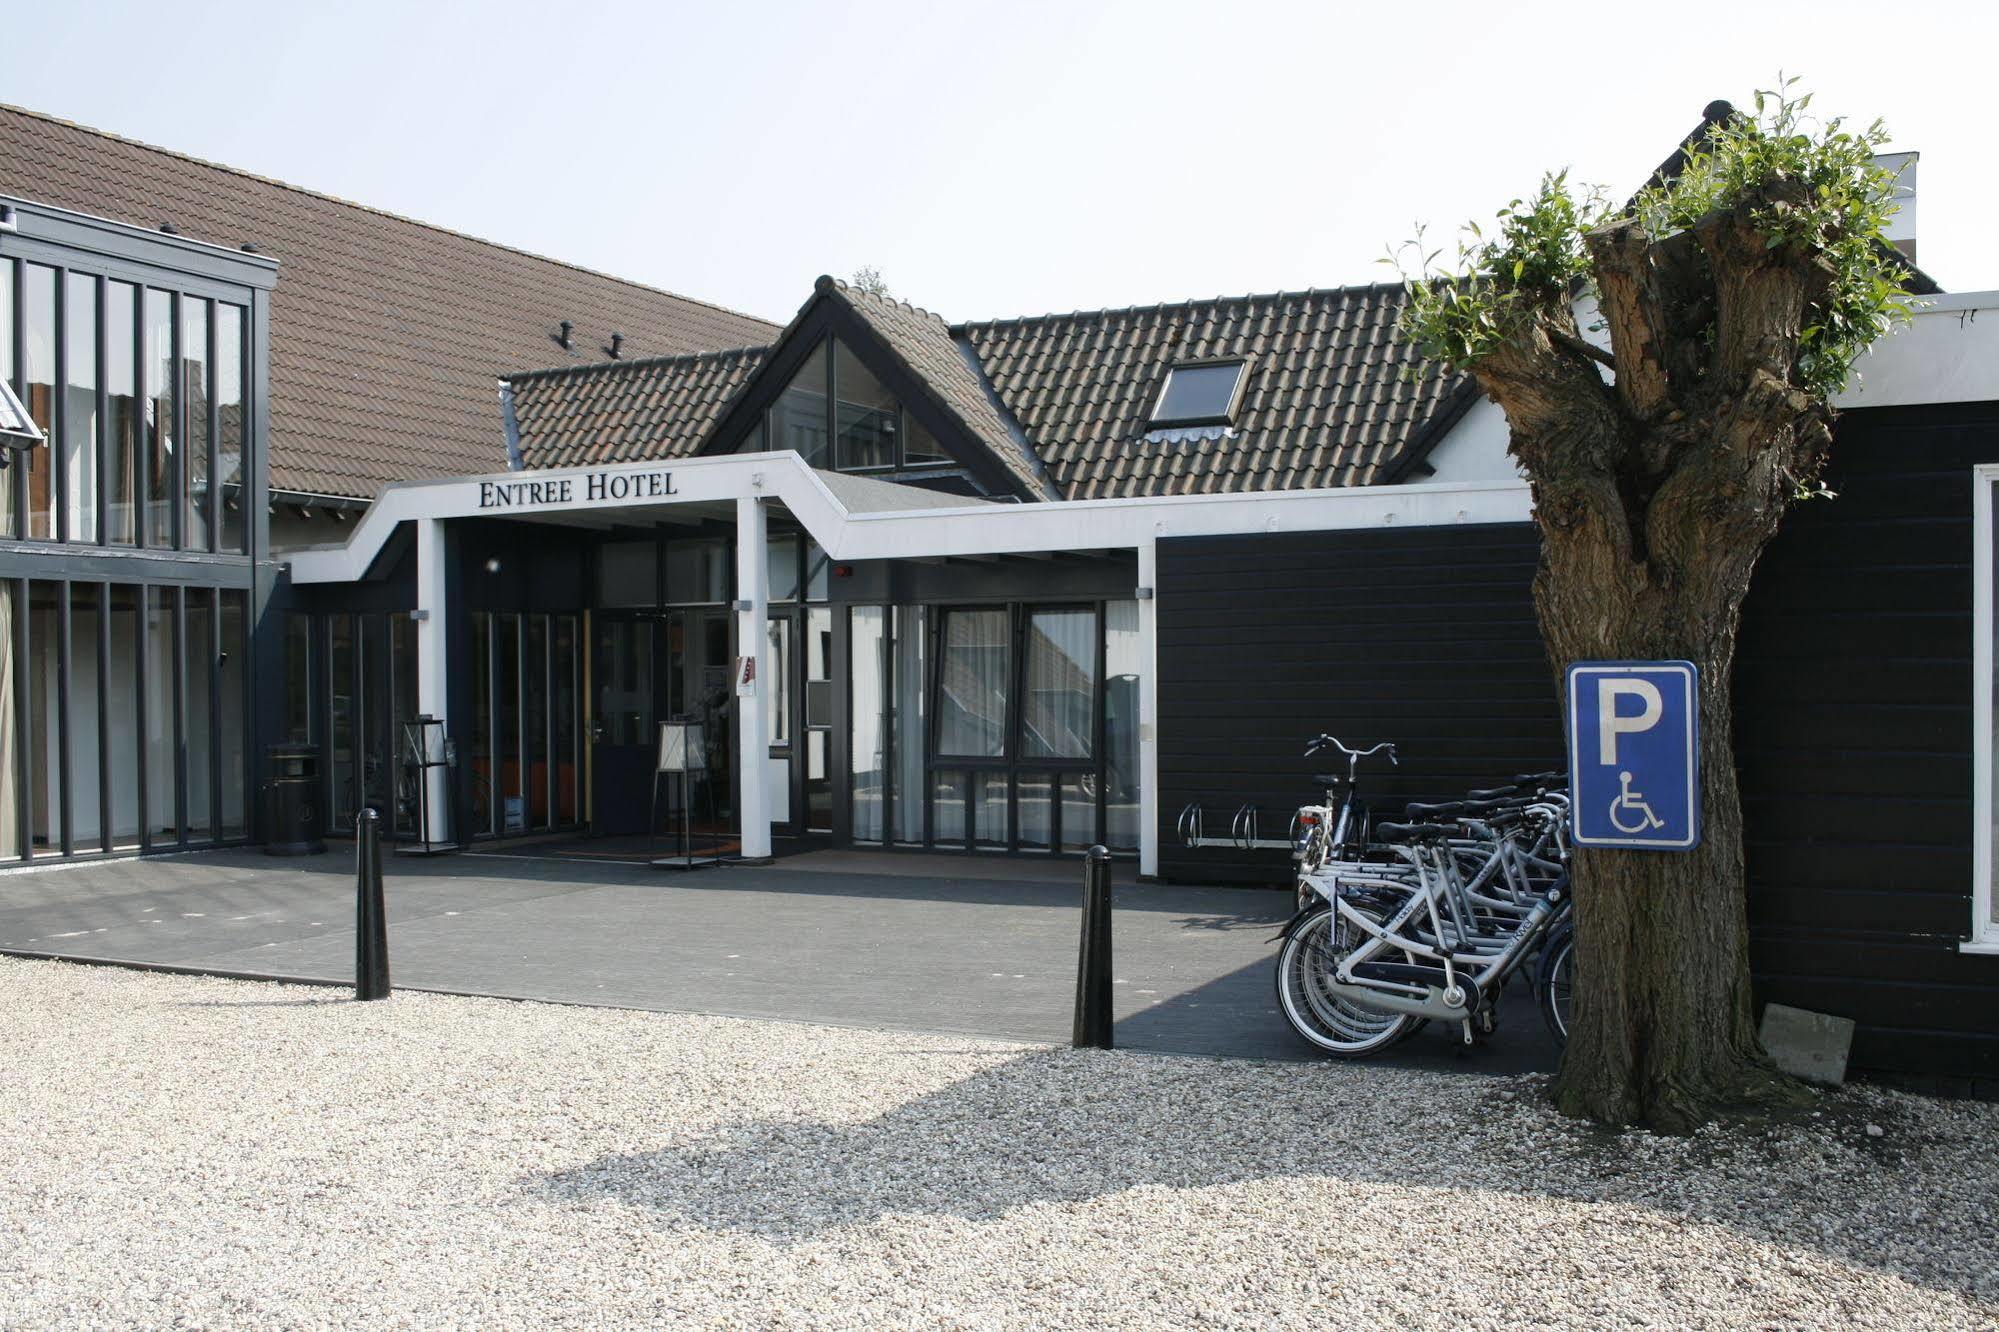 Fletcher Hotel-Restaurant De Witte Brug Lekkerkerk Exterior photo